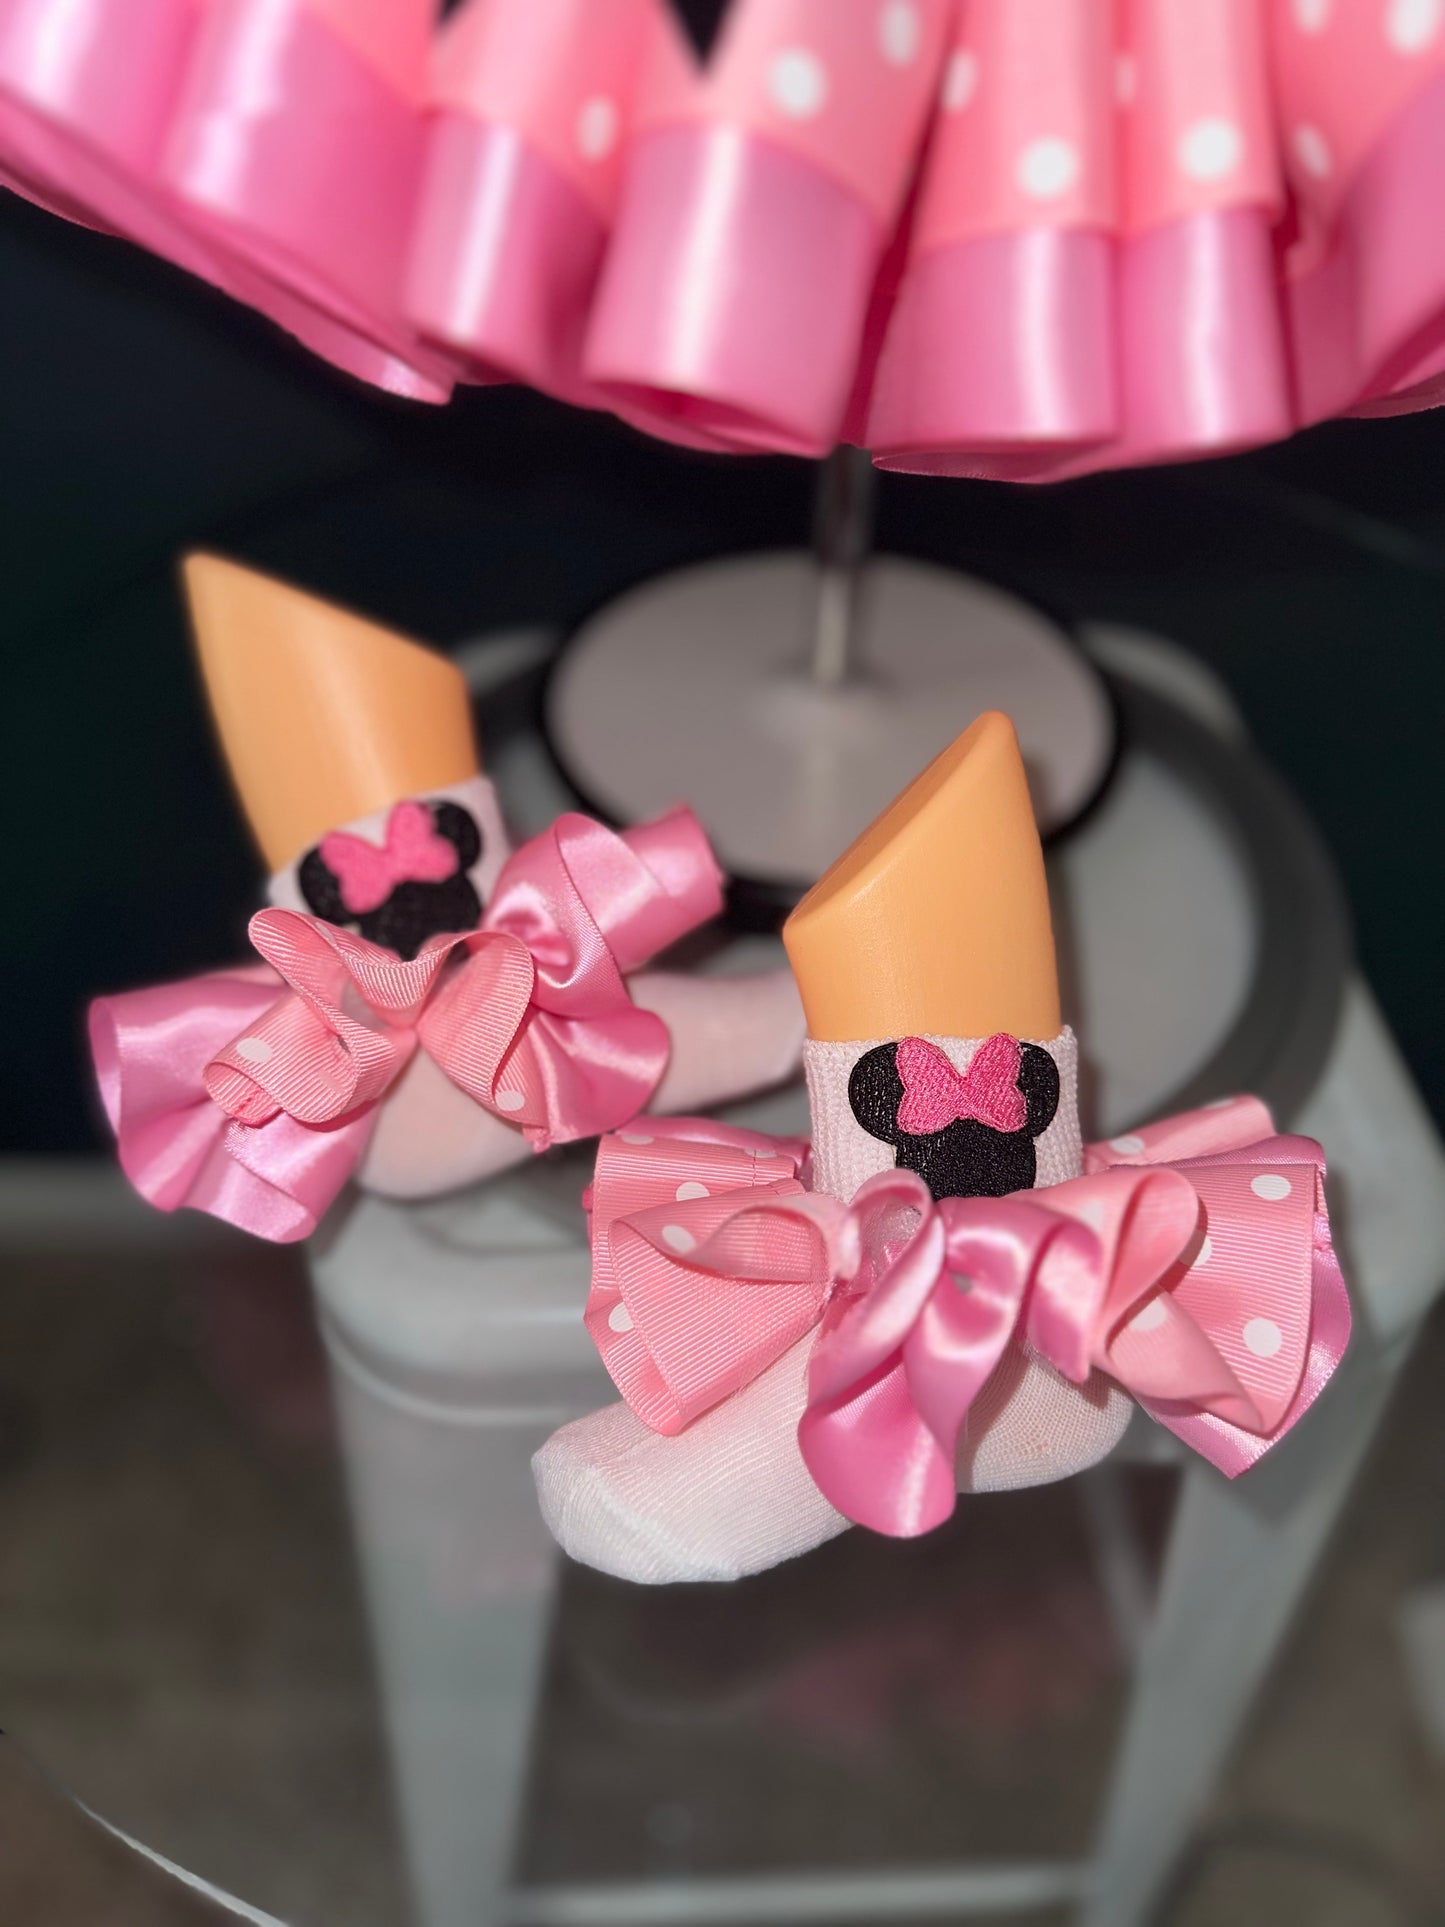 Minnie Mouse socks/ankle skirts